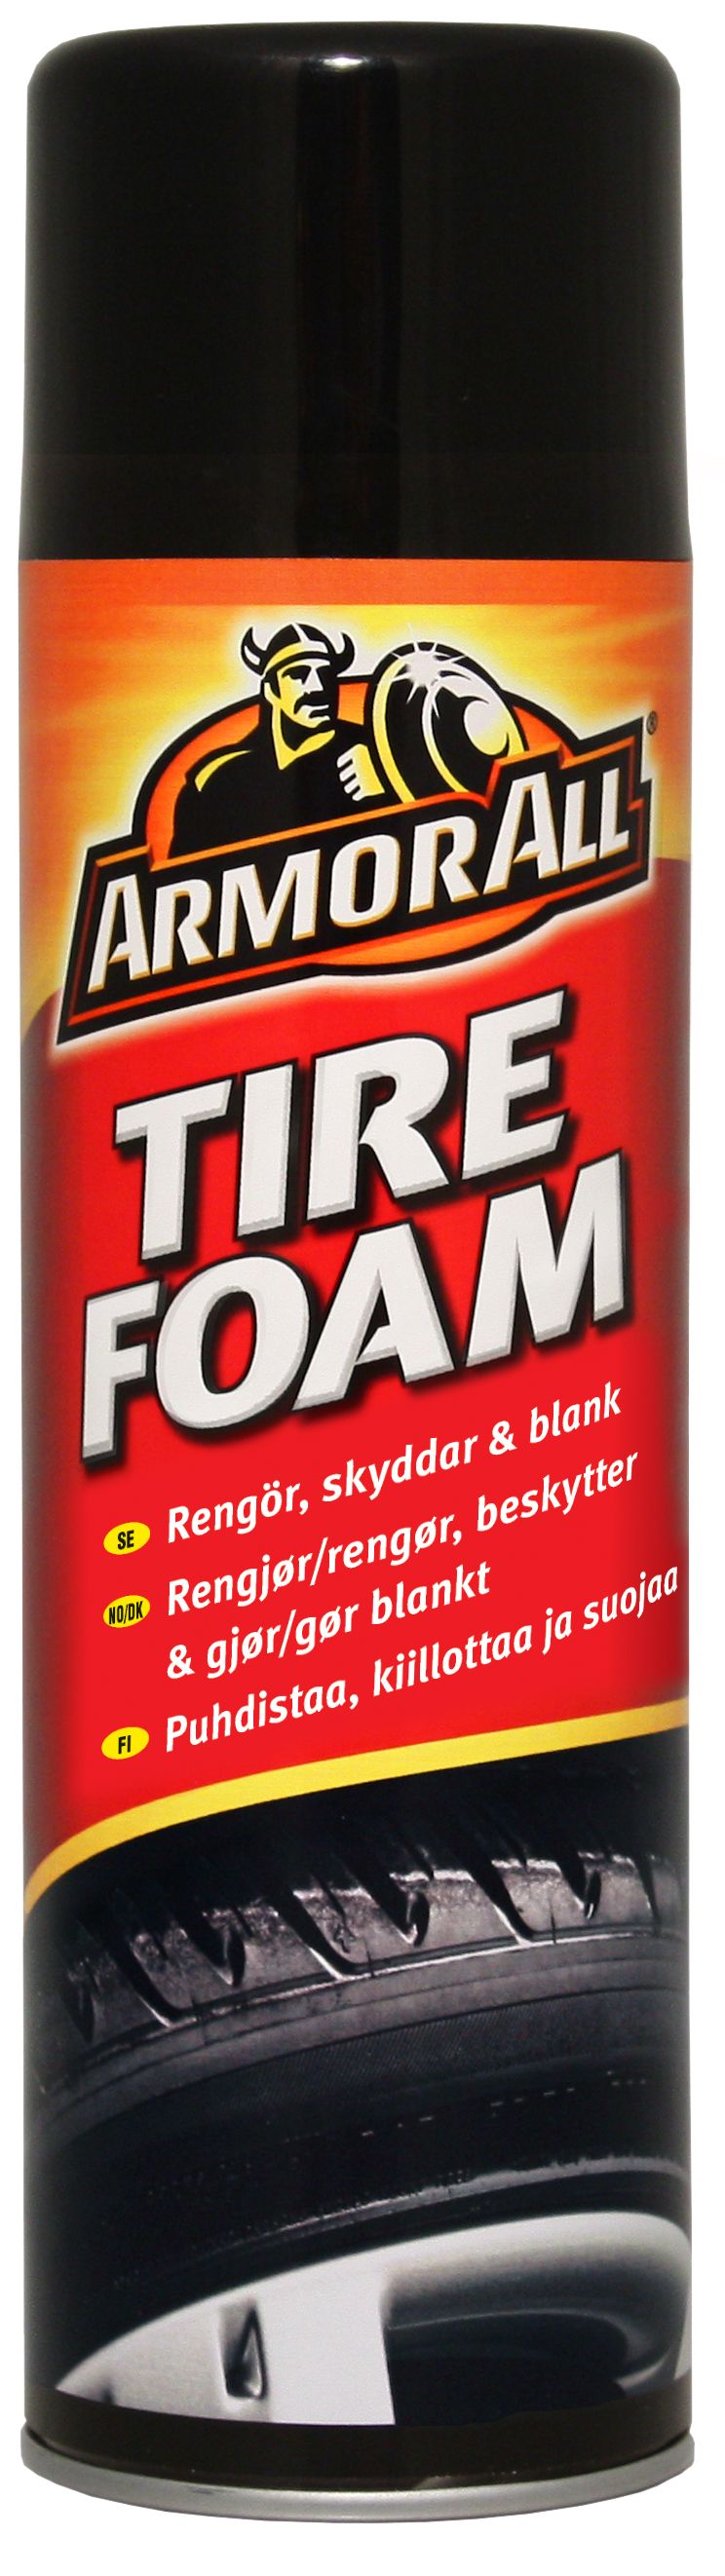 Armor All Tire Foam